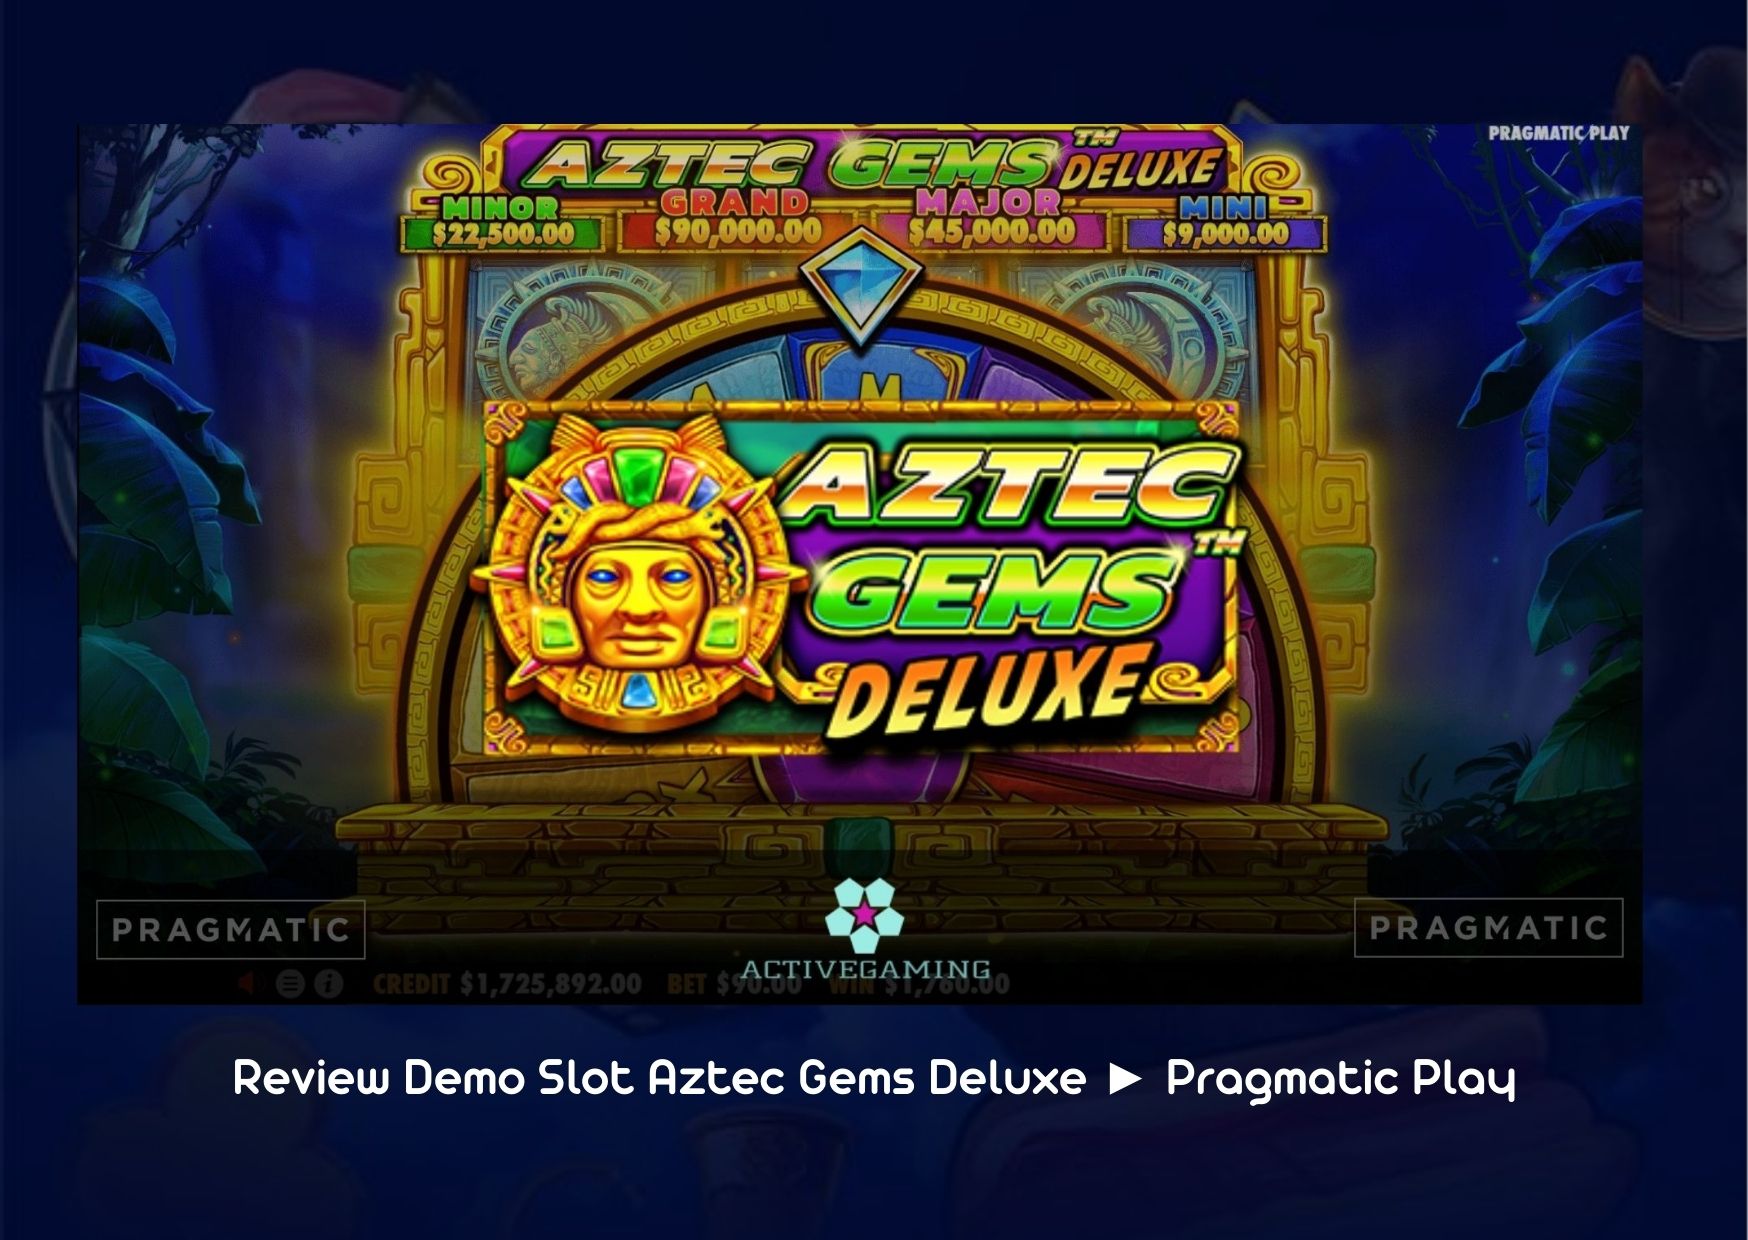 Review Demo Slot Aztec Gems Deluxe ► Pragmatic Play